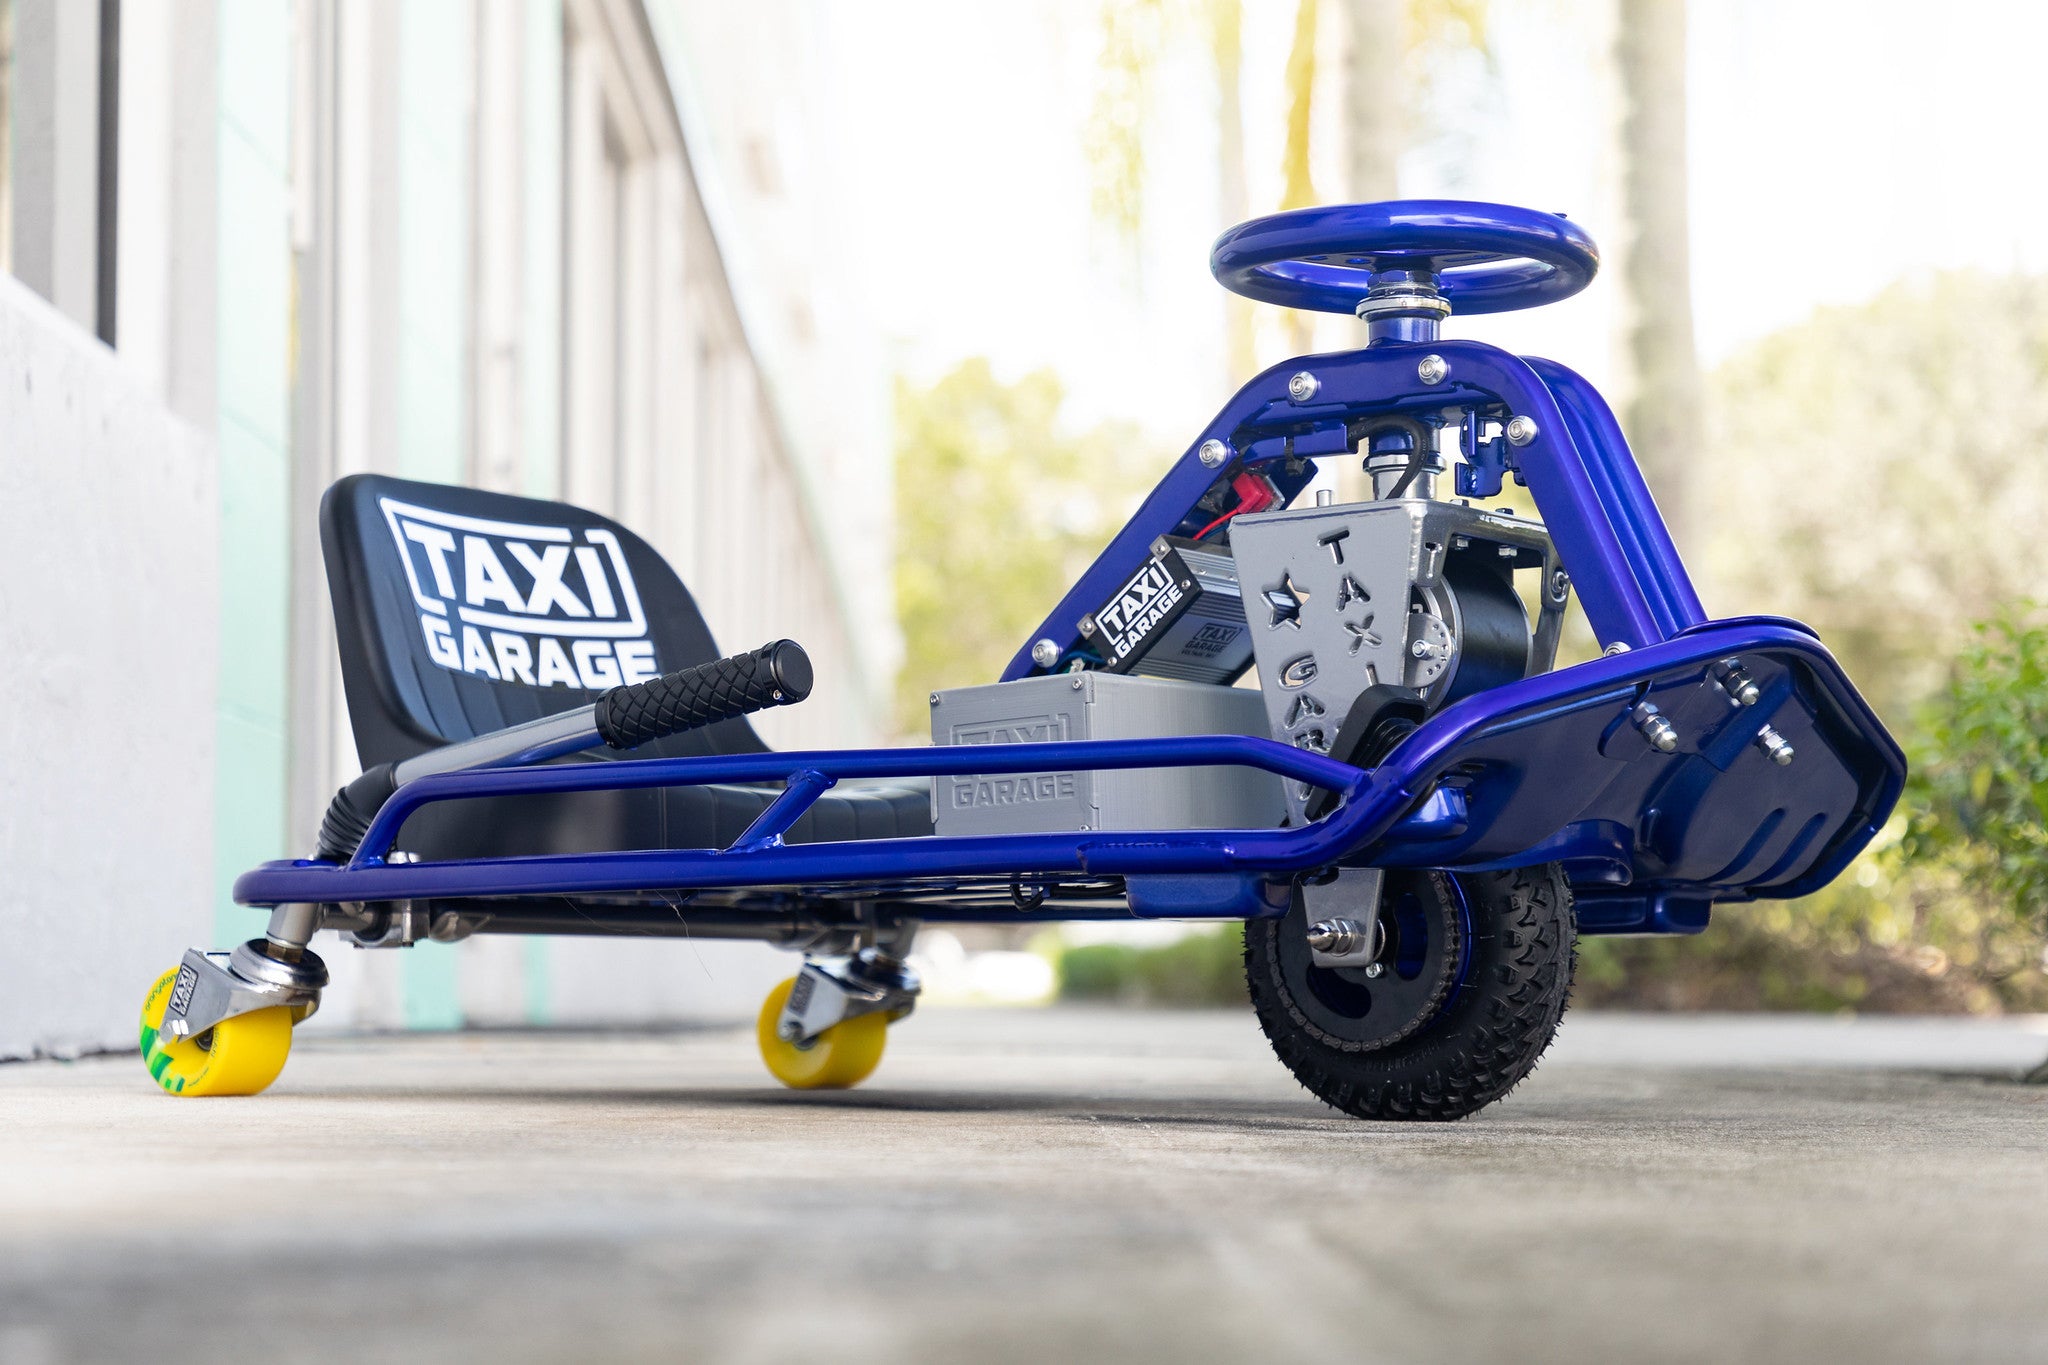 XL TAXI GARAGE Crazy Cart (STAGE 3)